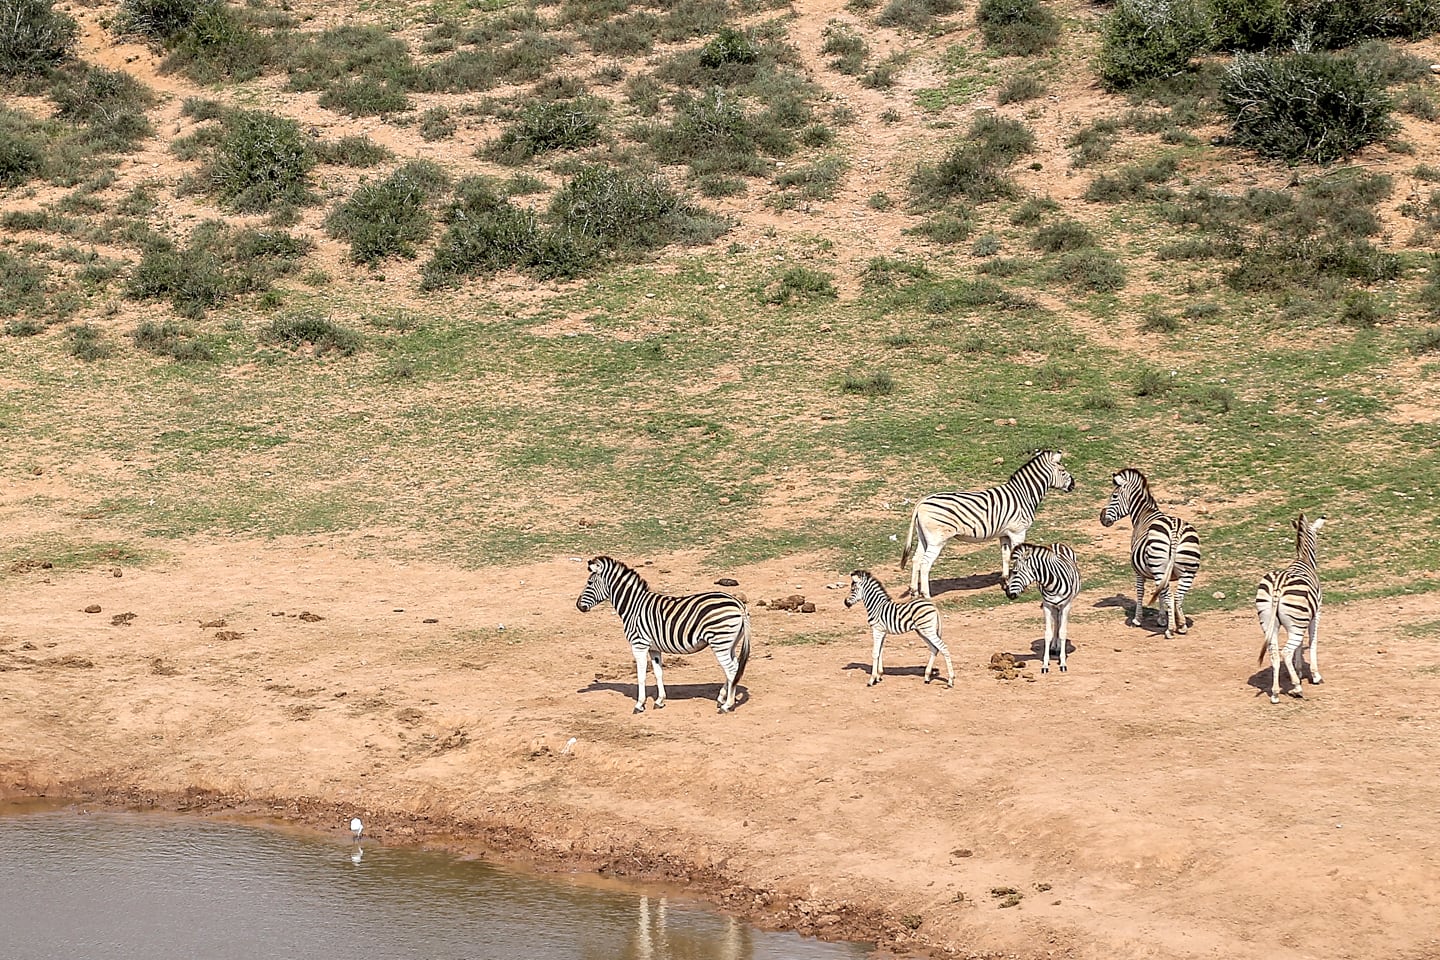 zebra near a pond at Addo Elephant Park South Africa